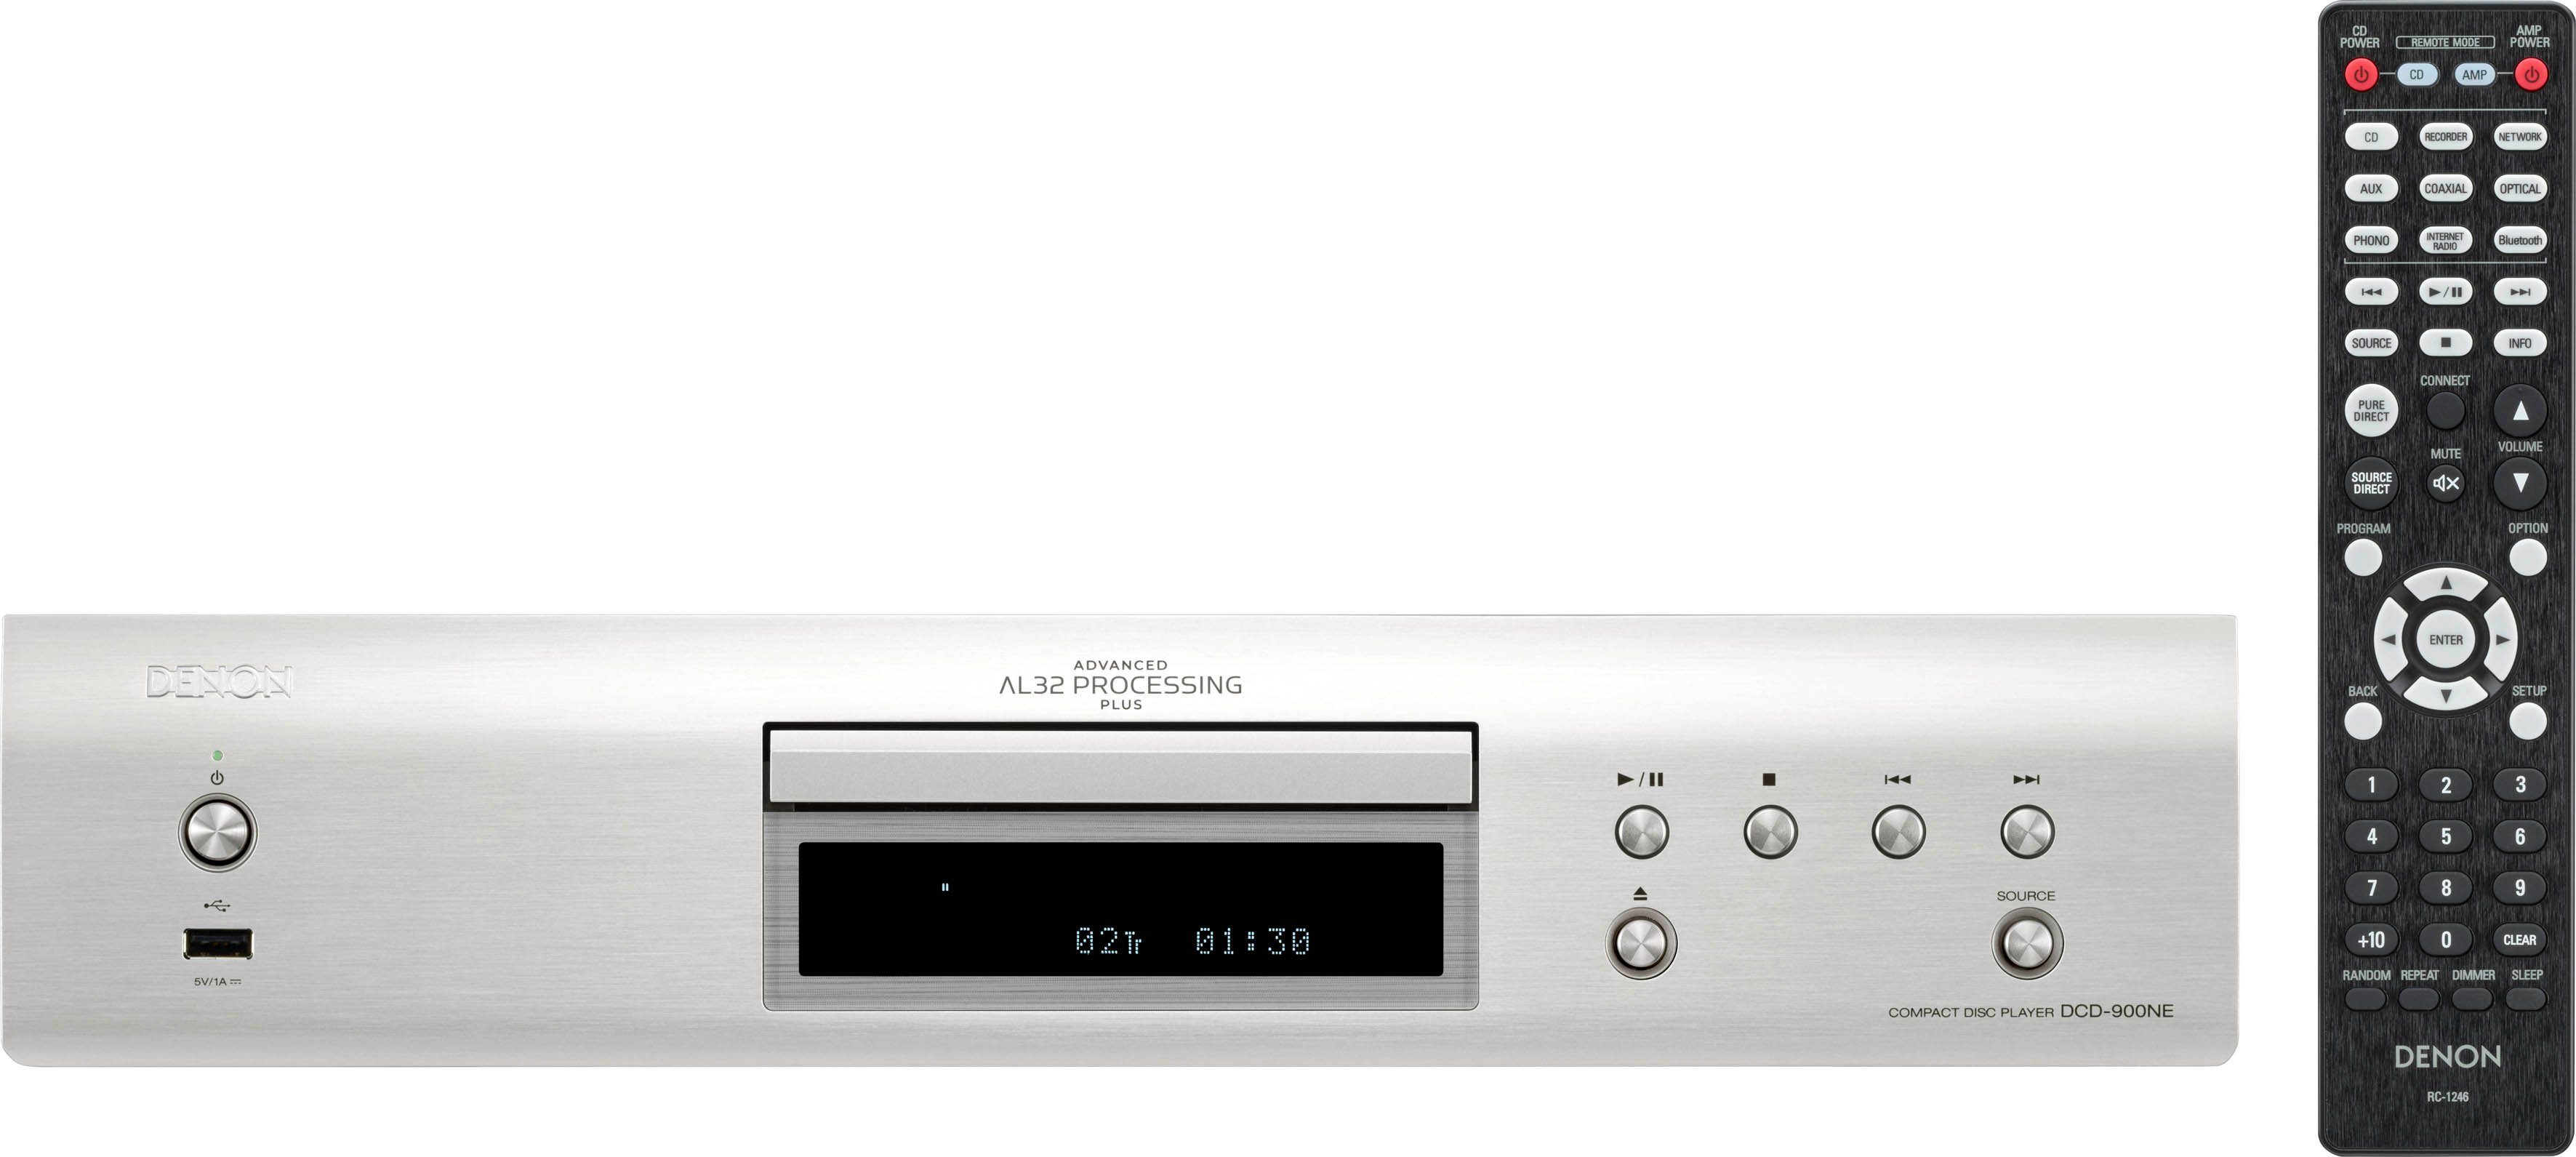 DCD-900NE silber CD-Player (USB-Audiowiedergabe) Denon